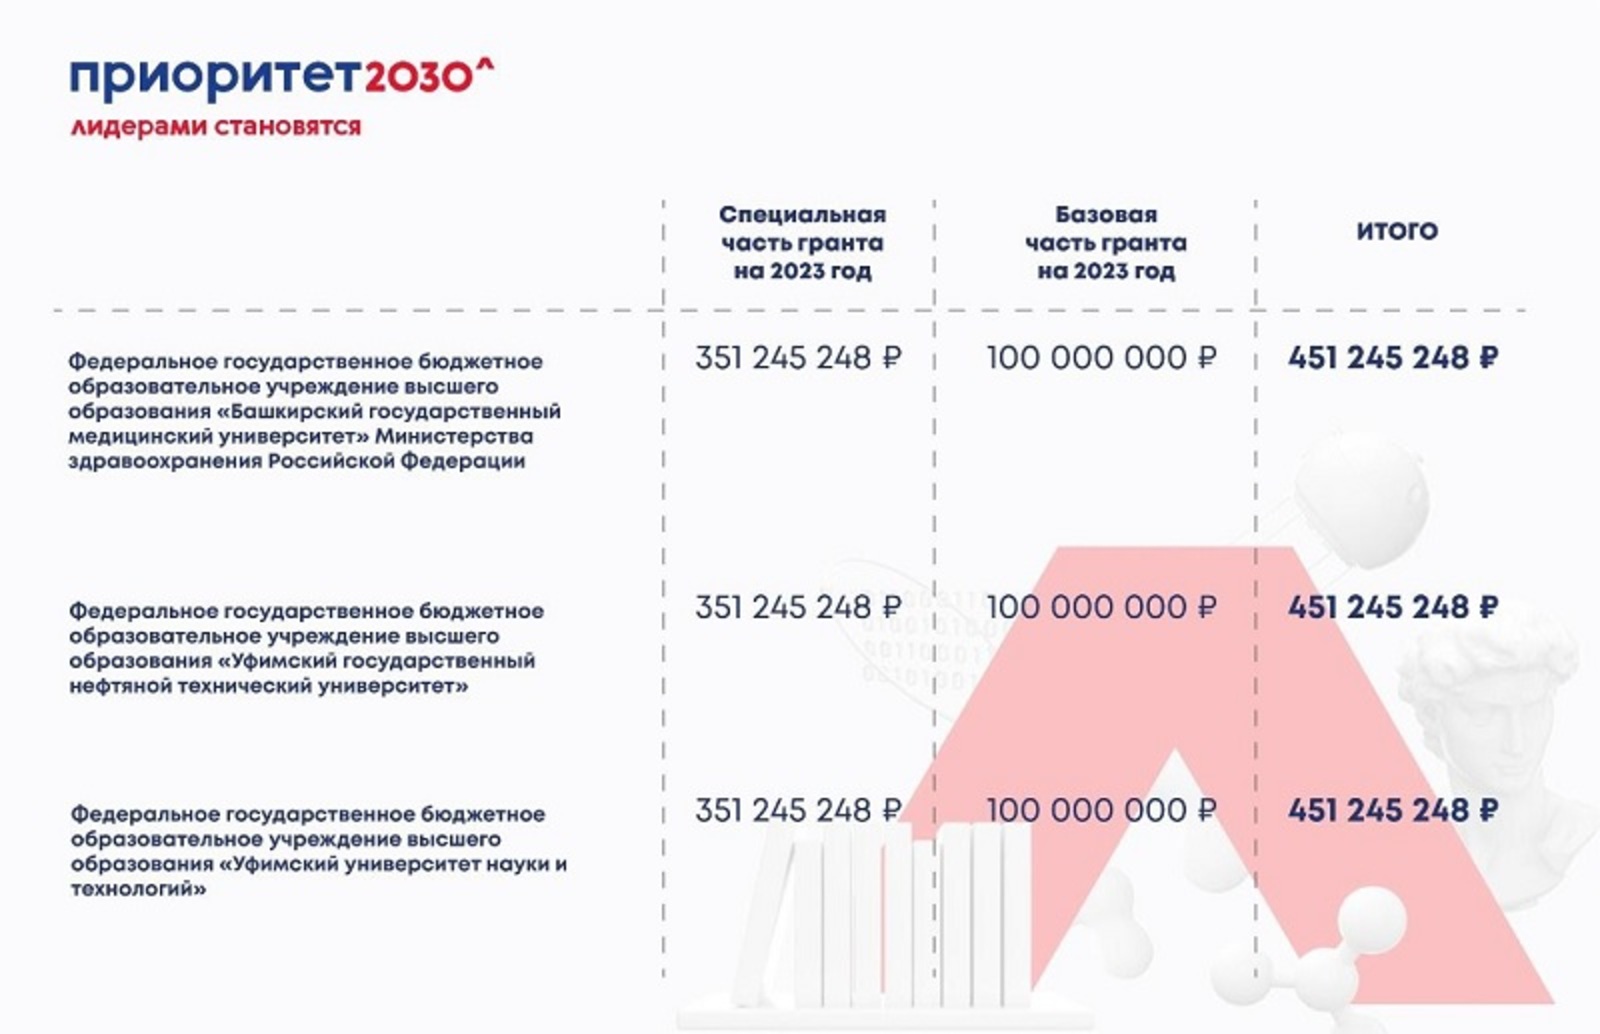 Вузы Башкирии получат более 1,3 миллиарда рублей по проекту «Приоритет-2030»